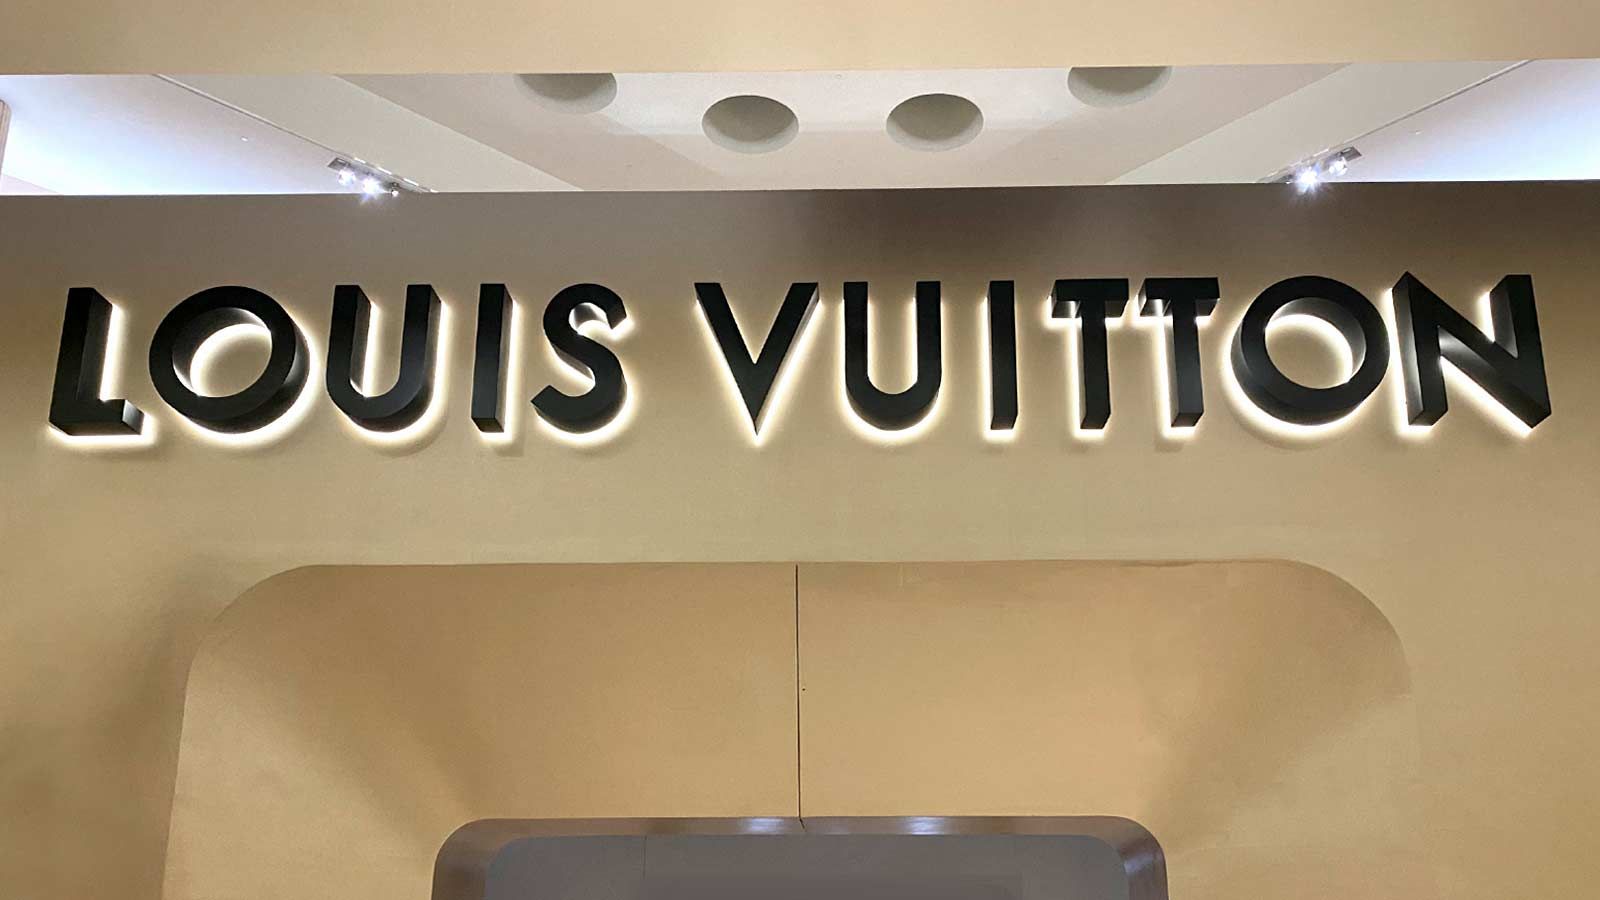 What Font Is Louis Vuitton Logo